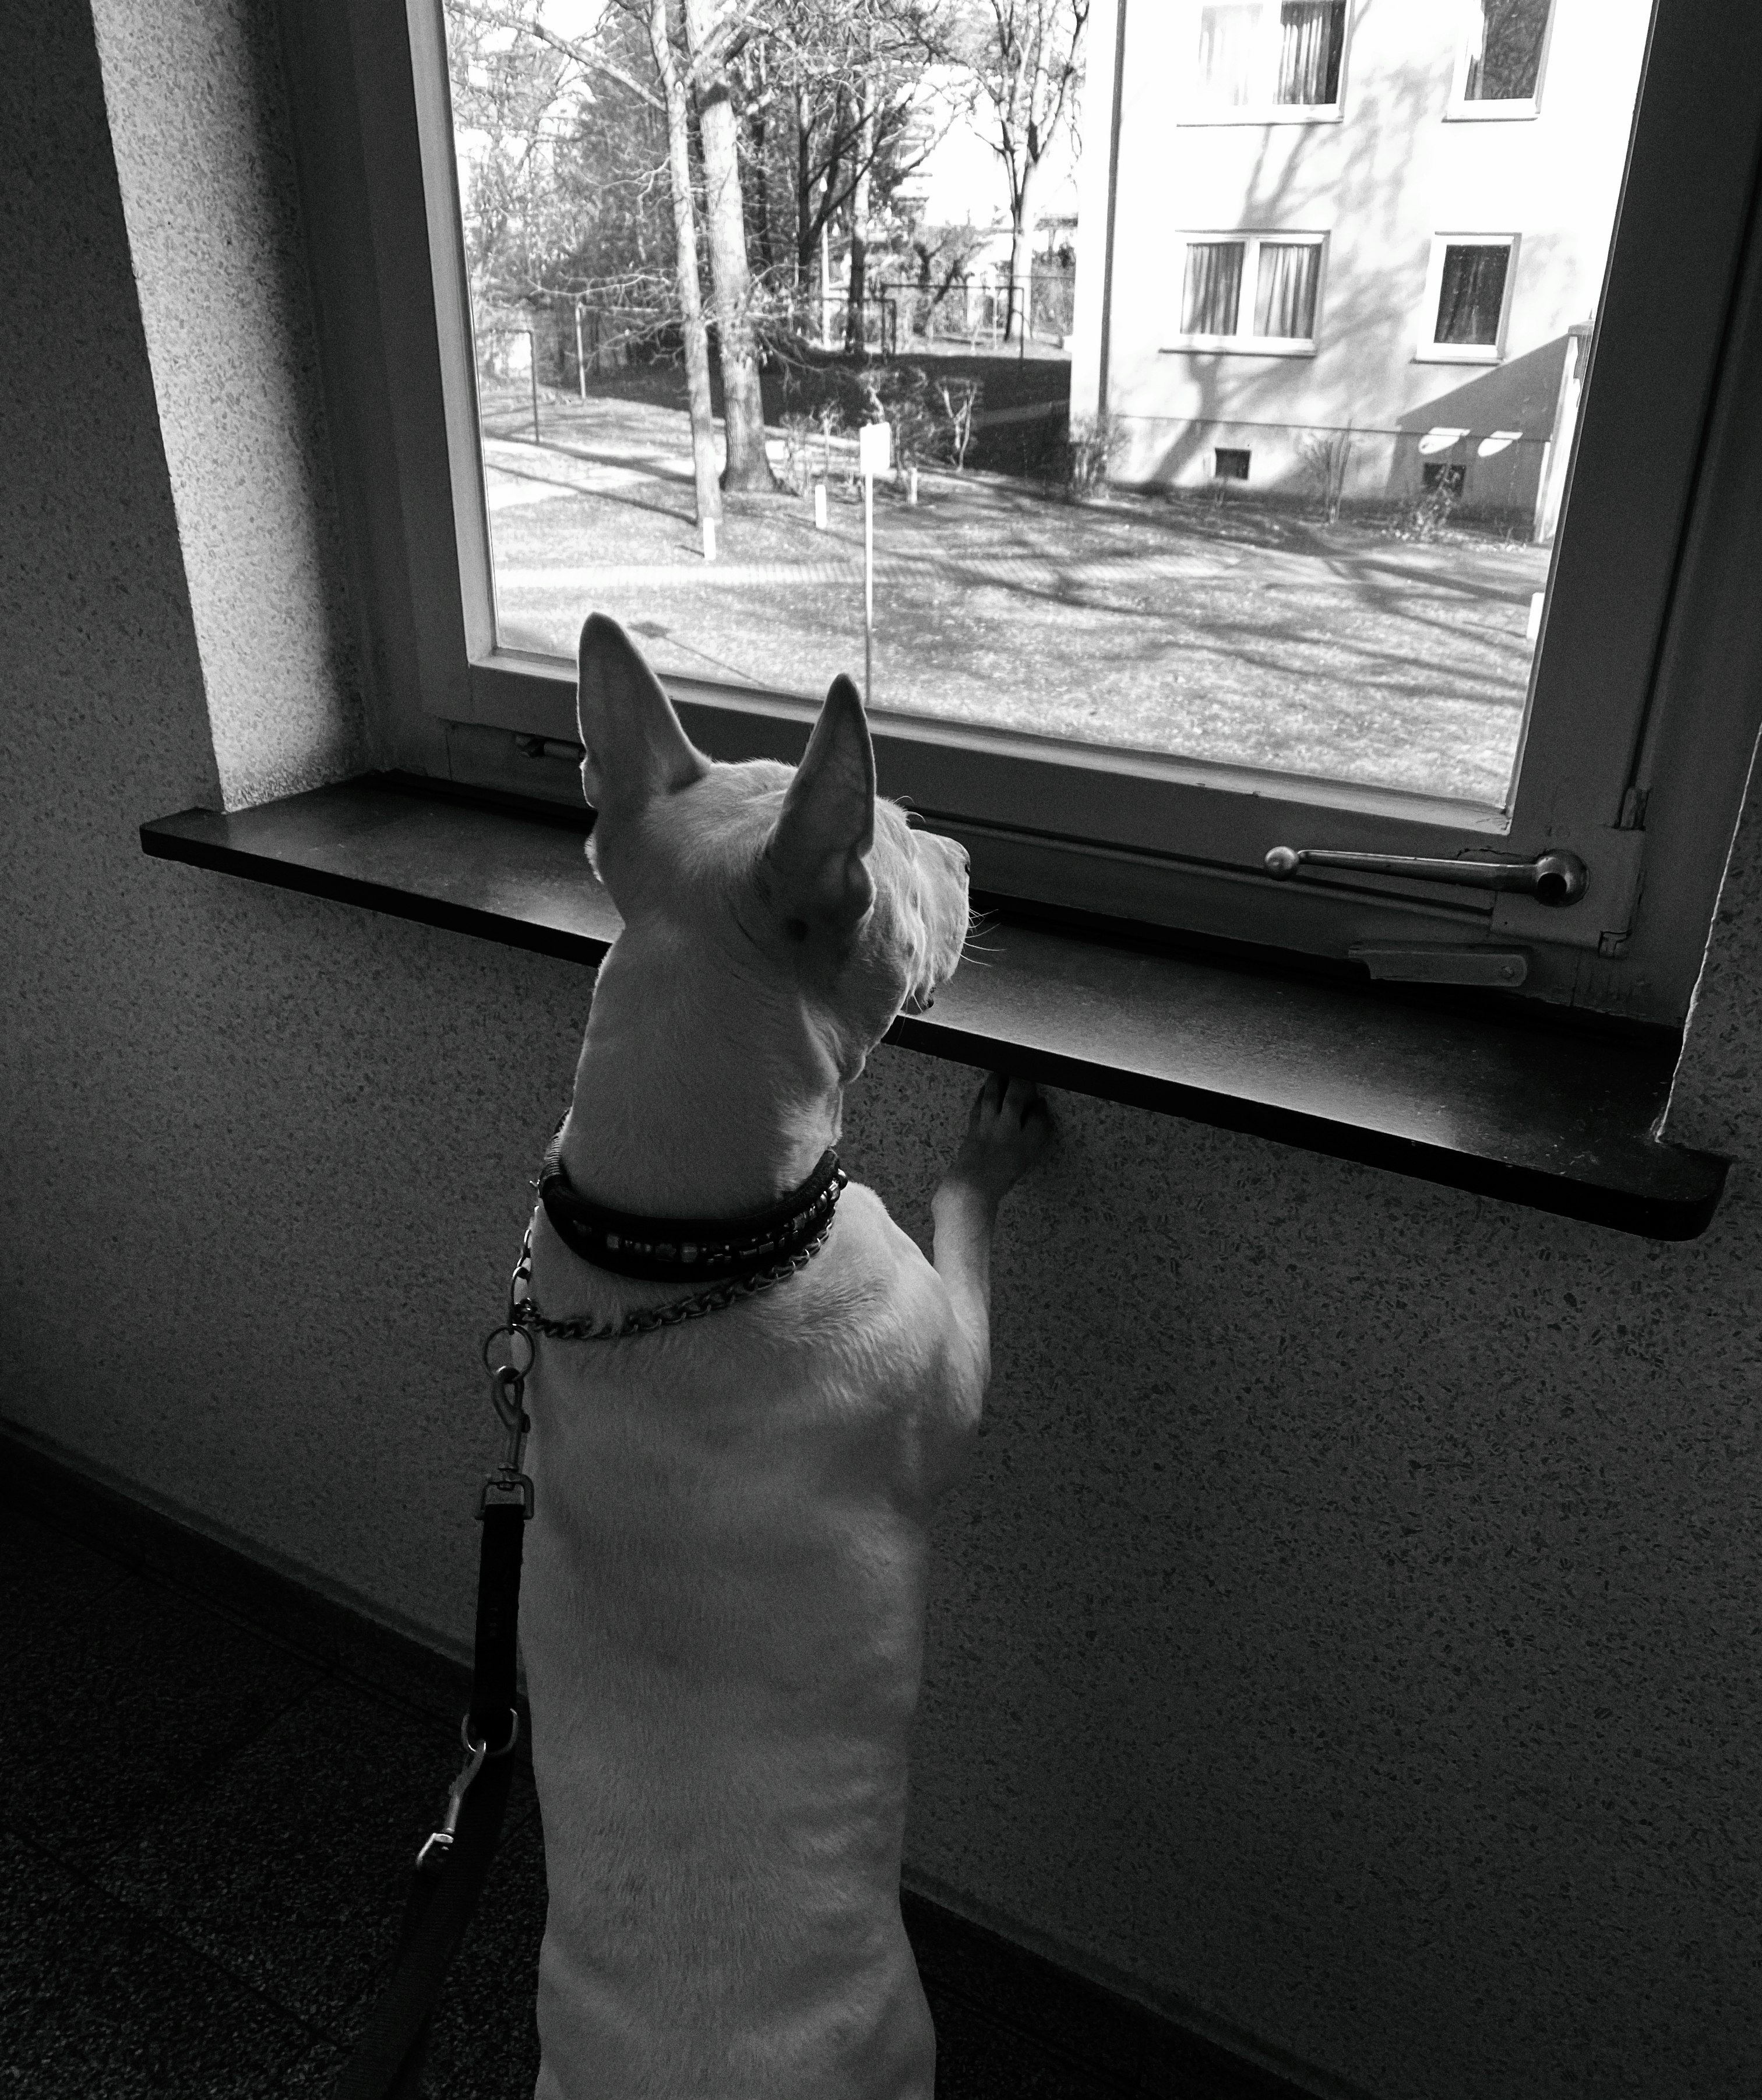 grayscale photo of short coated dog near window